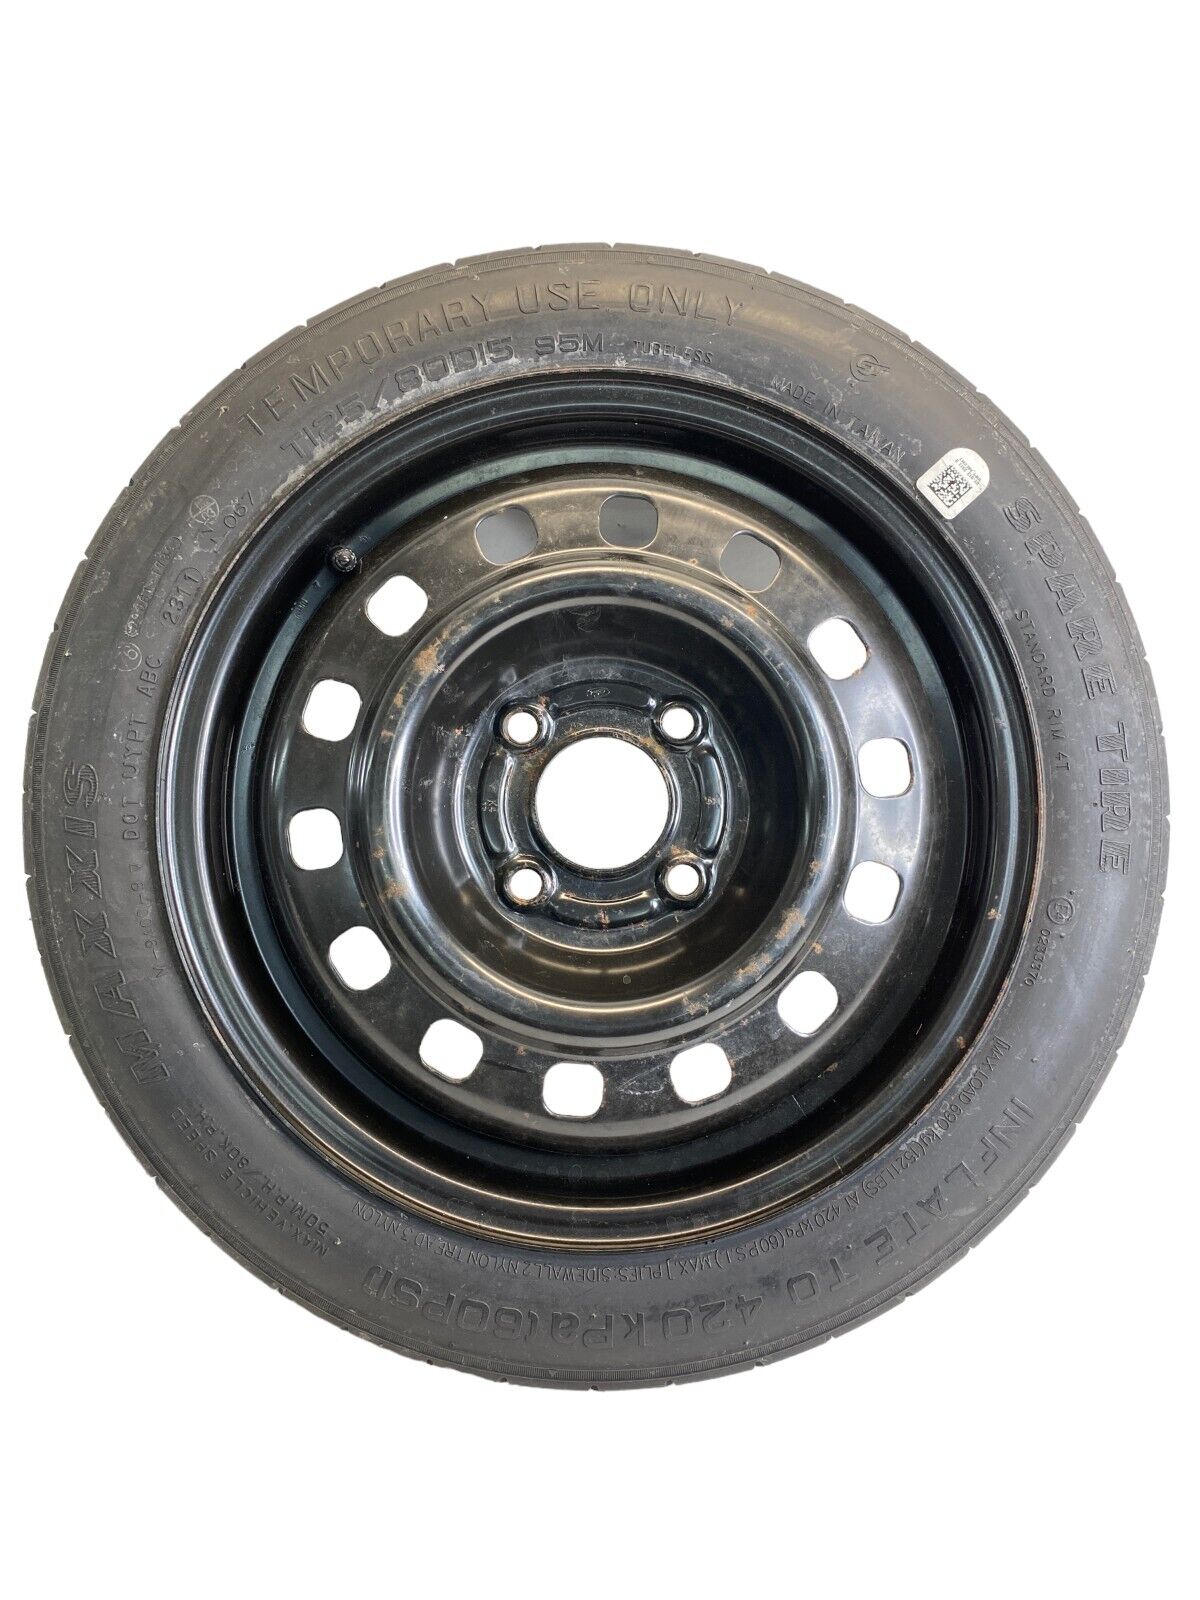 2000-2011 Focus 2011-2019 Fiesta Spare Tire & Wheel Rim Compact Donut 125/80D15